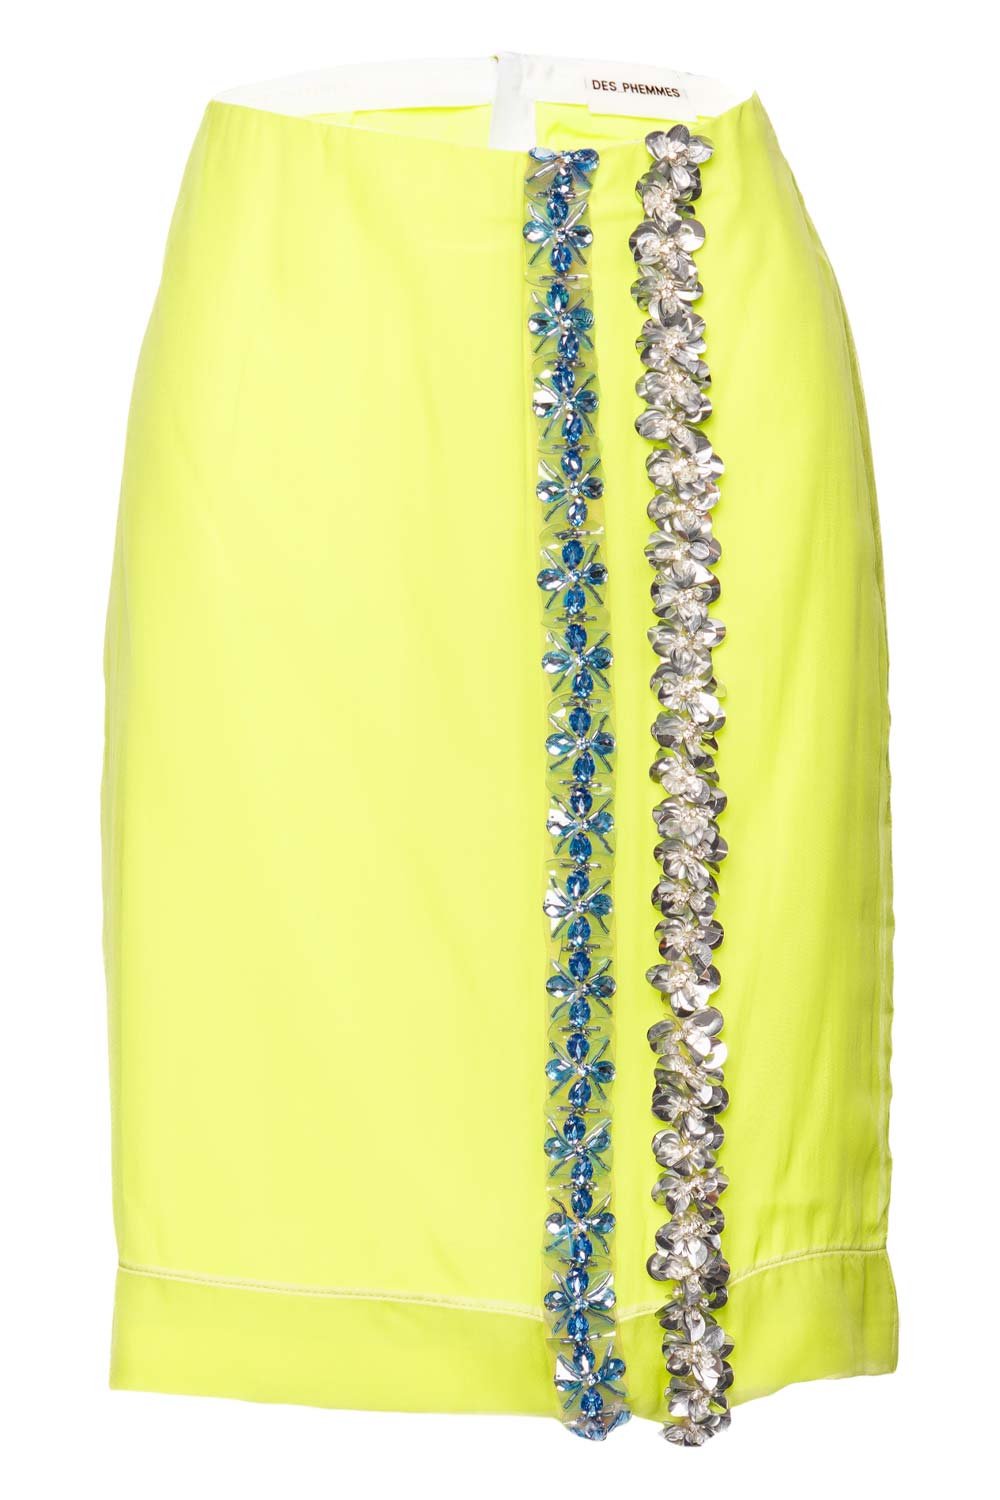 DES_PHEMMES Sequin Embroidered Borders Lime Mini Skirt